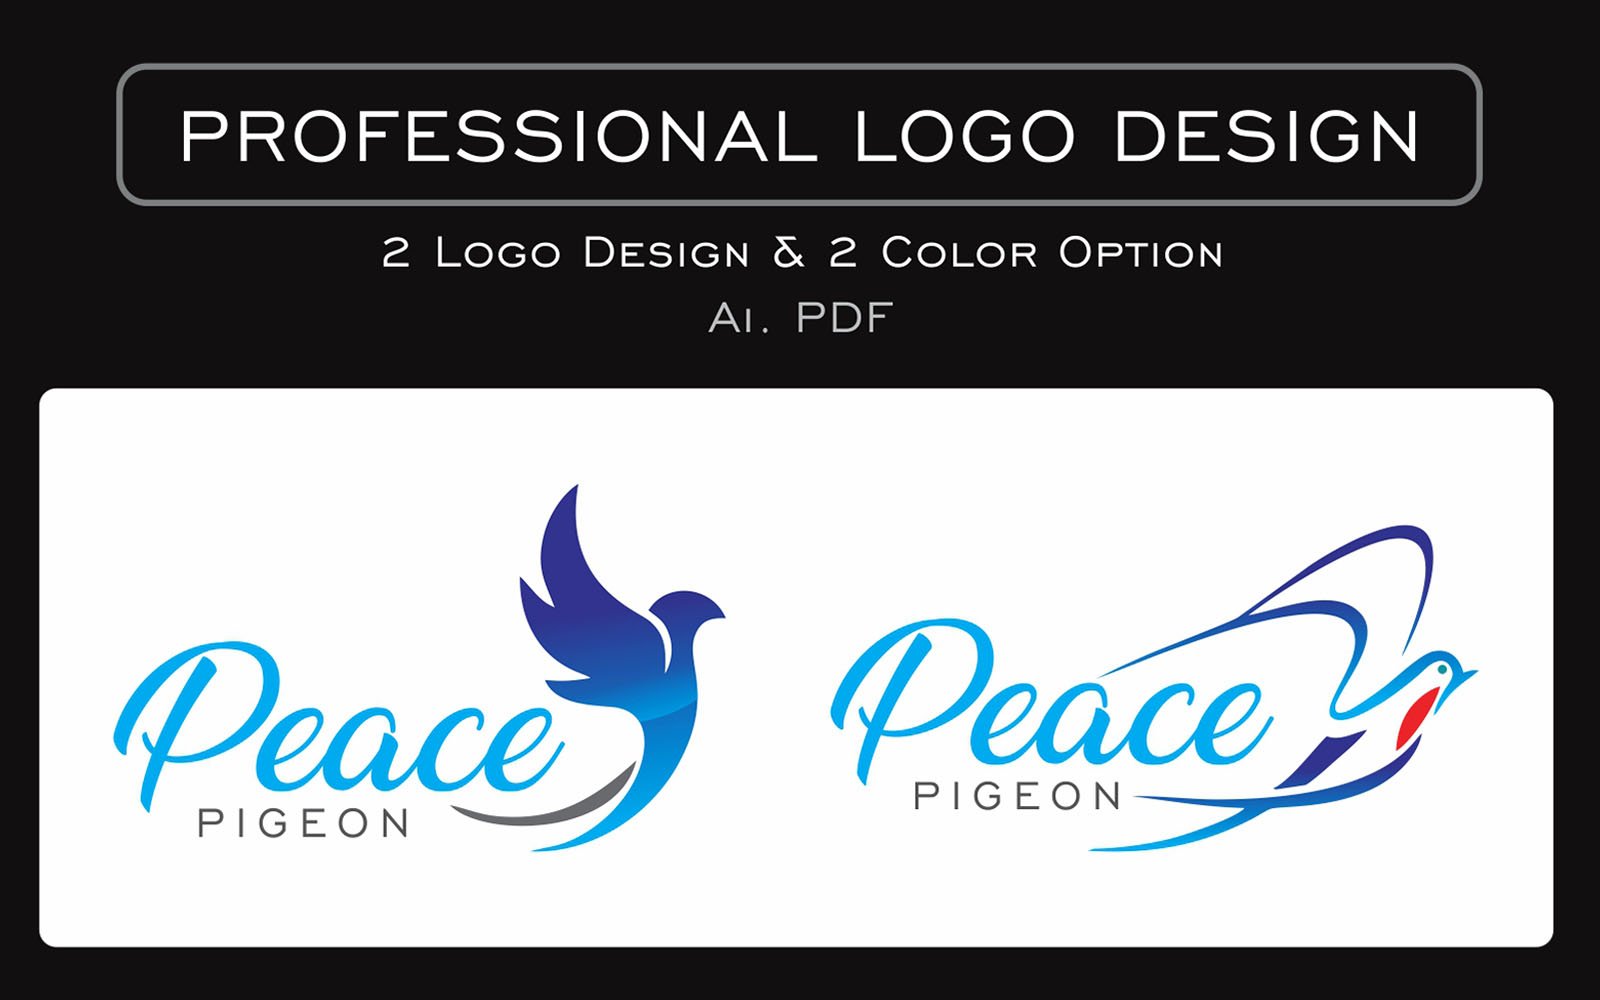 Pigeon vector logo design symbol of peace & humanity icon.